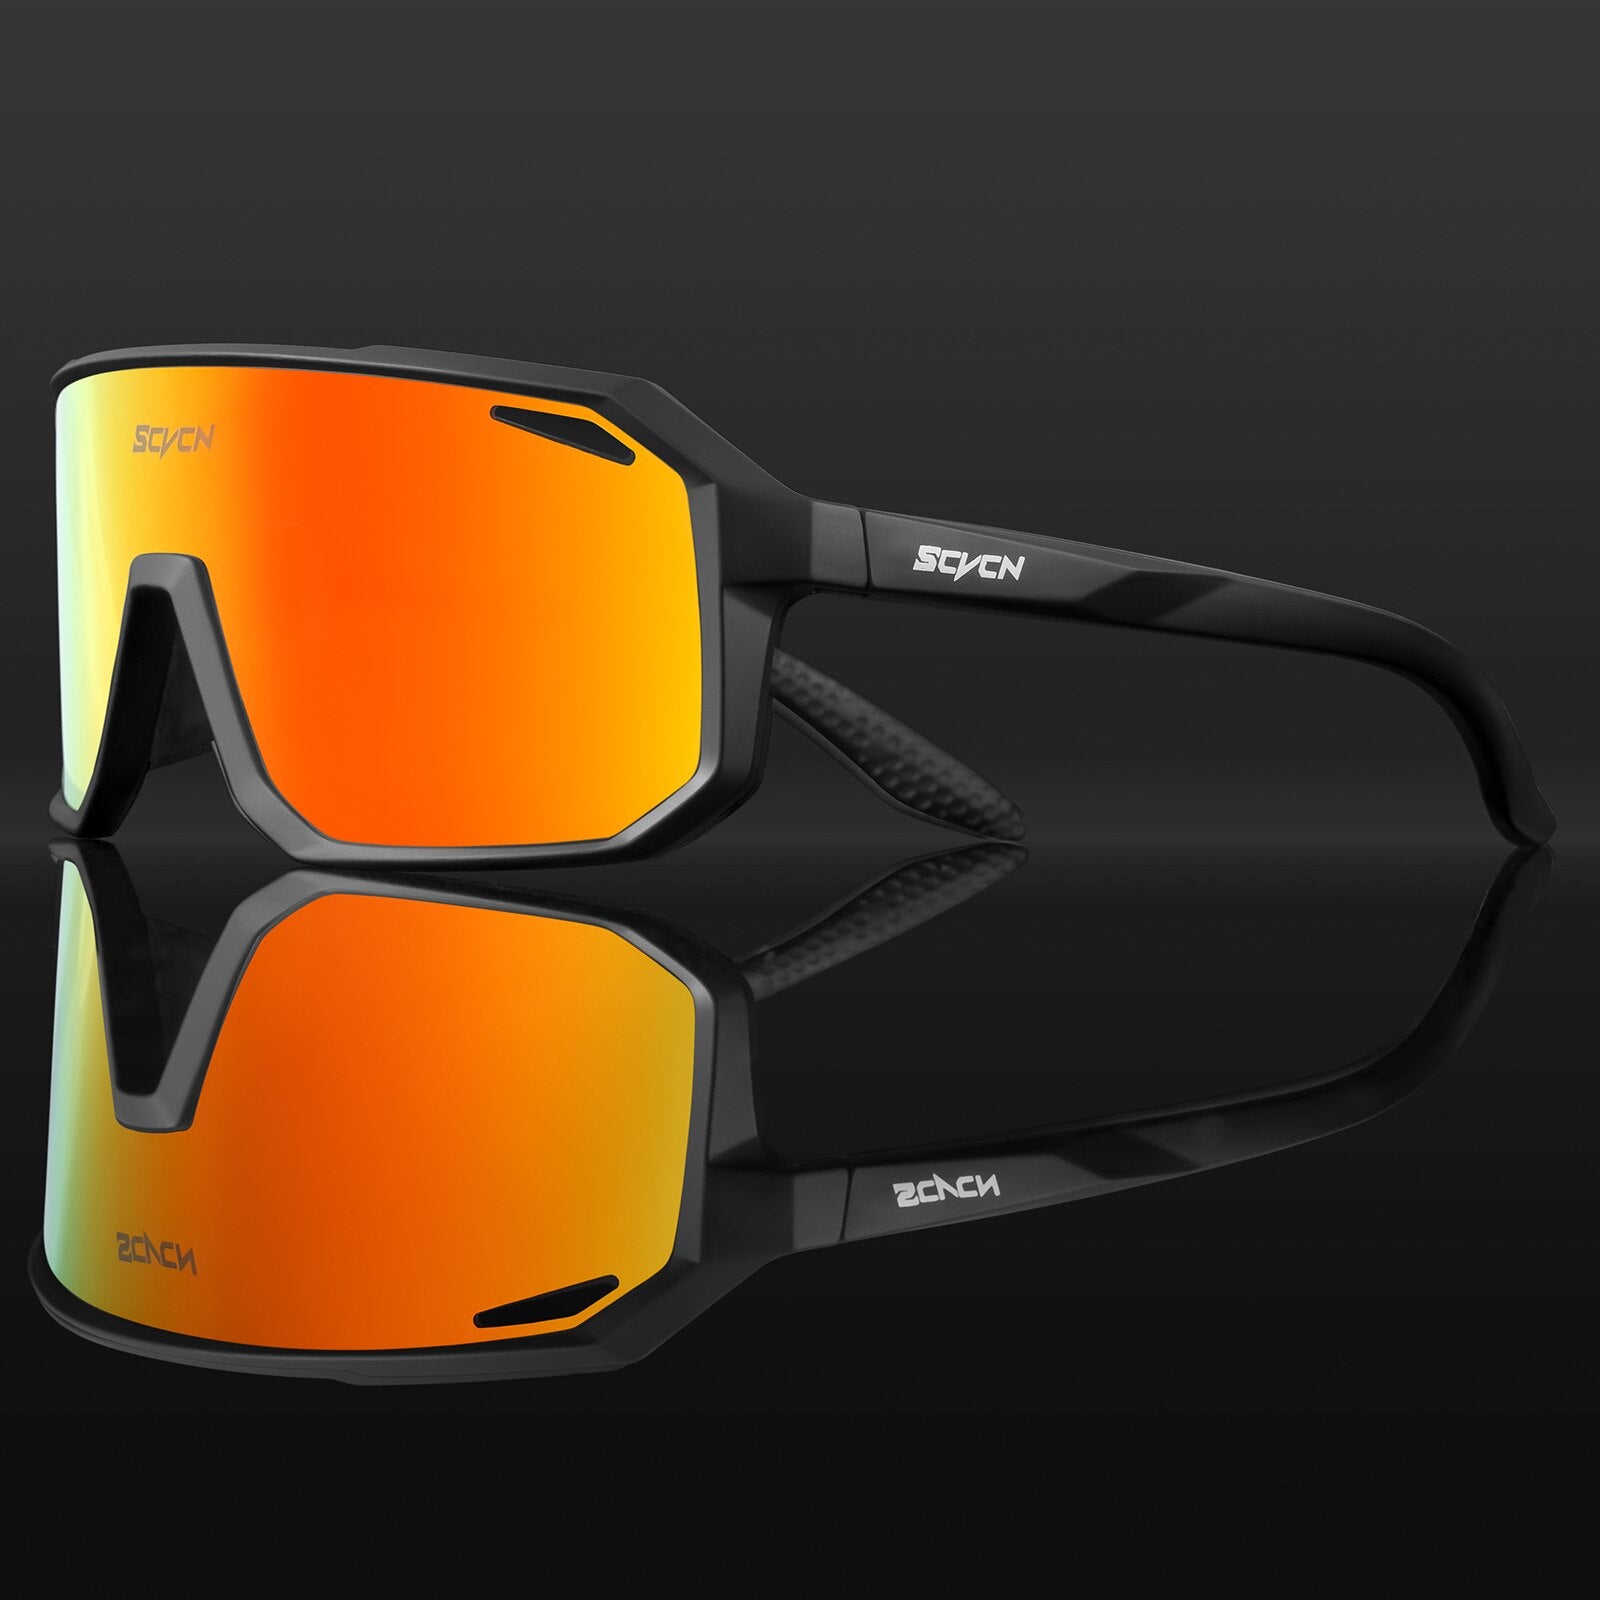 Outdoor Eyewear Scvcn Polarized Cycling Sunglasses Men Women